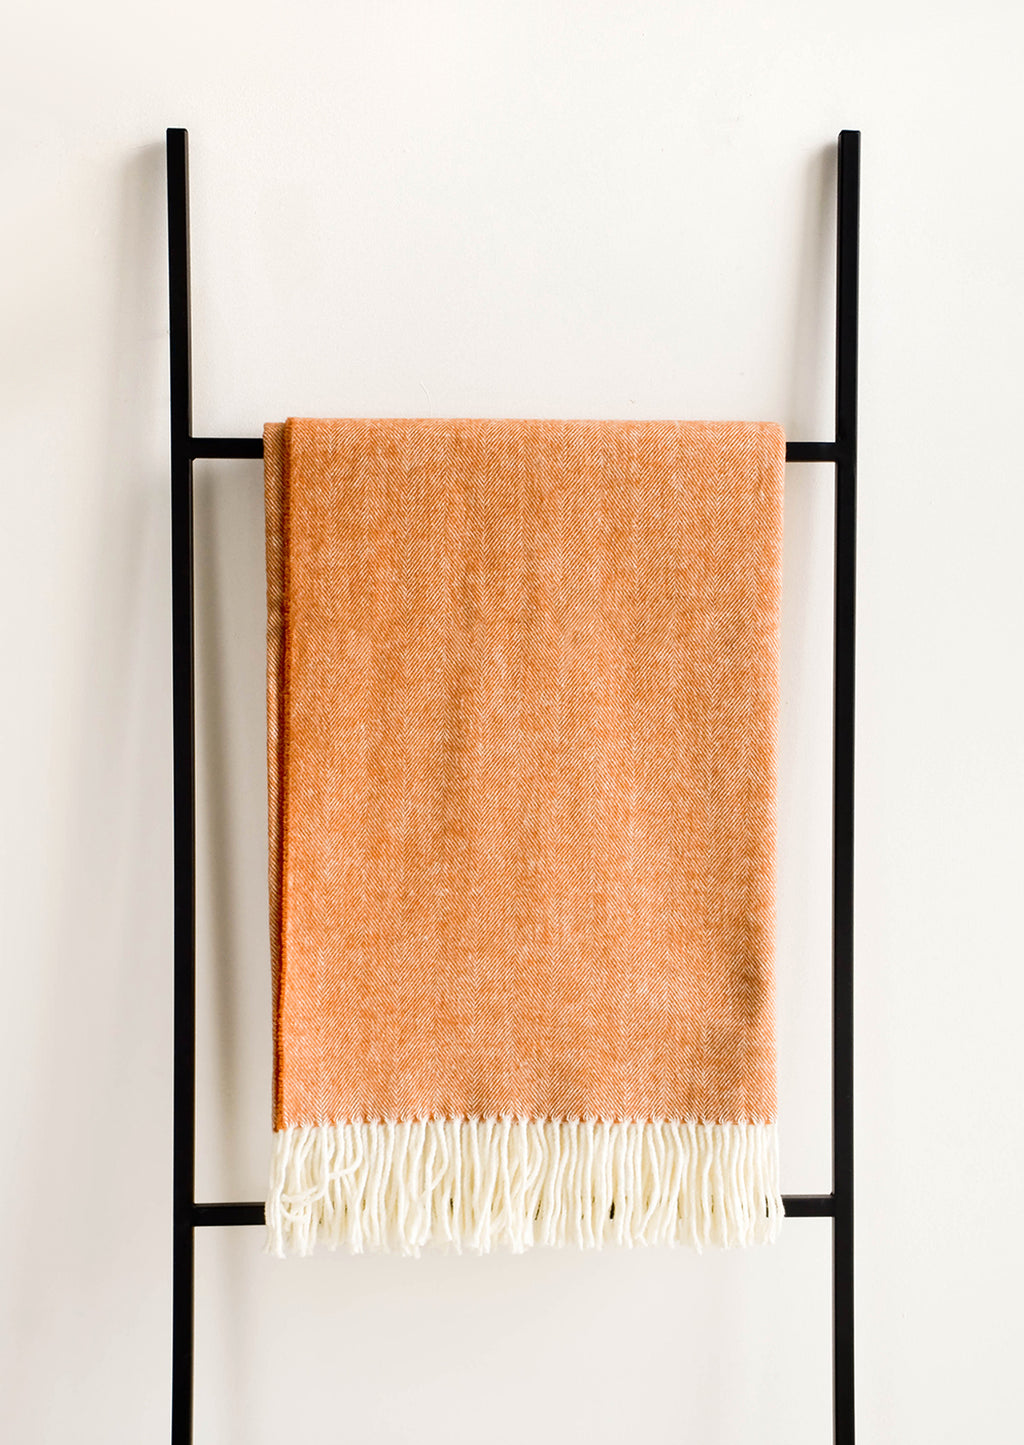 3: Soft blanket in colored herringbone weave. Ivory tassel trim at ends. Displayed hanging on a ladder.